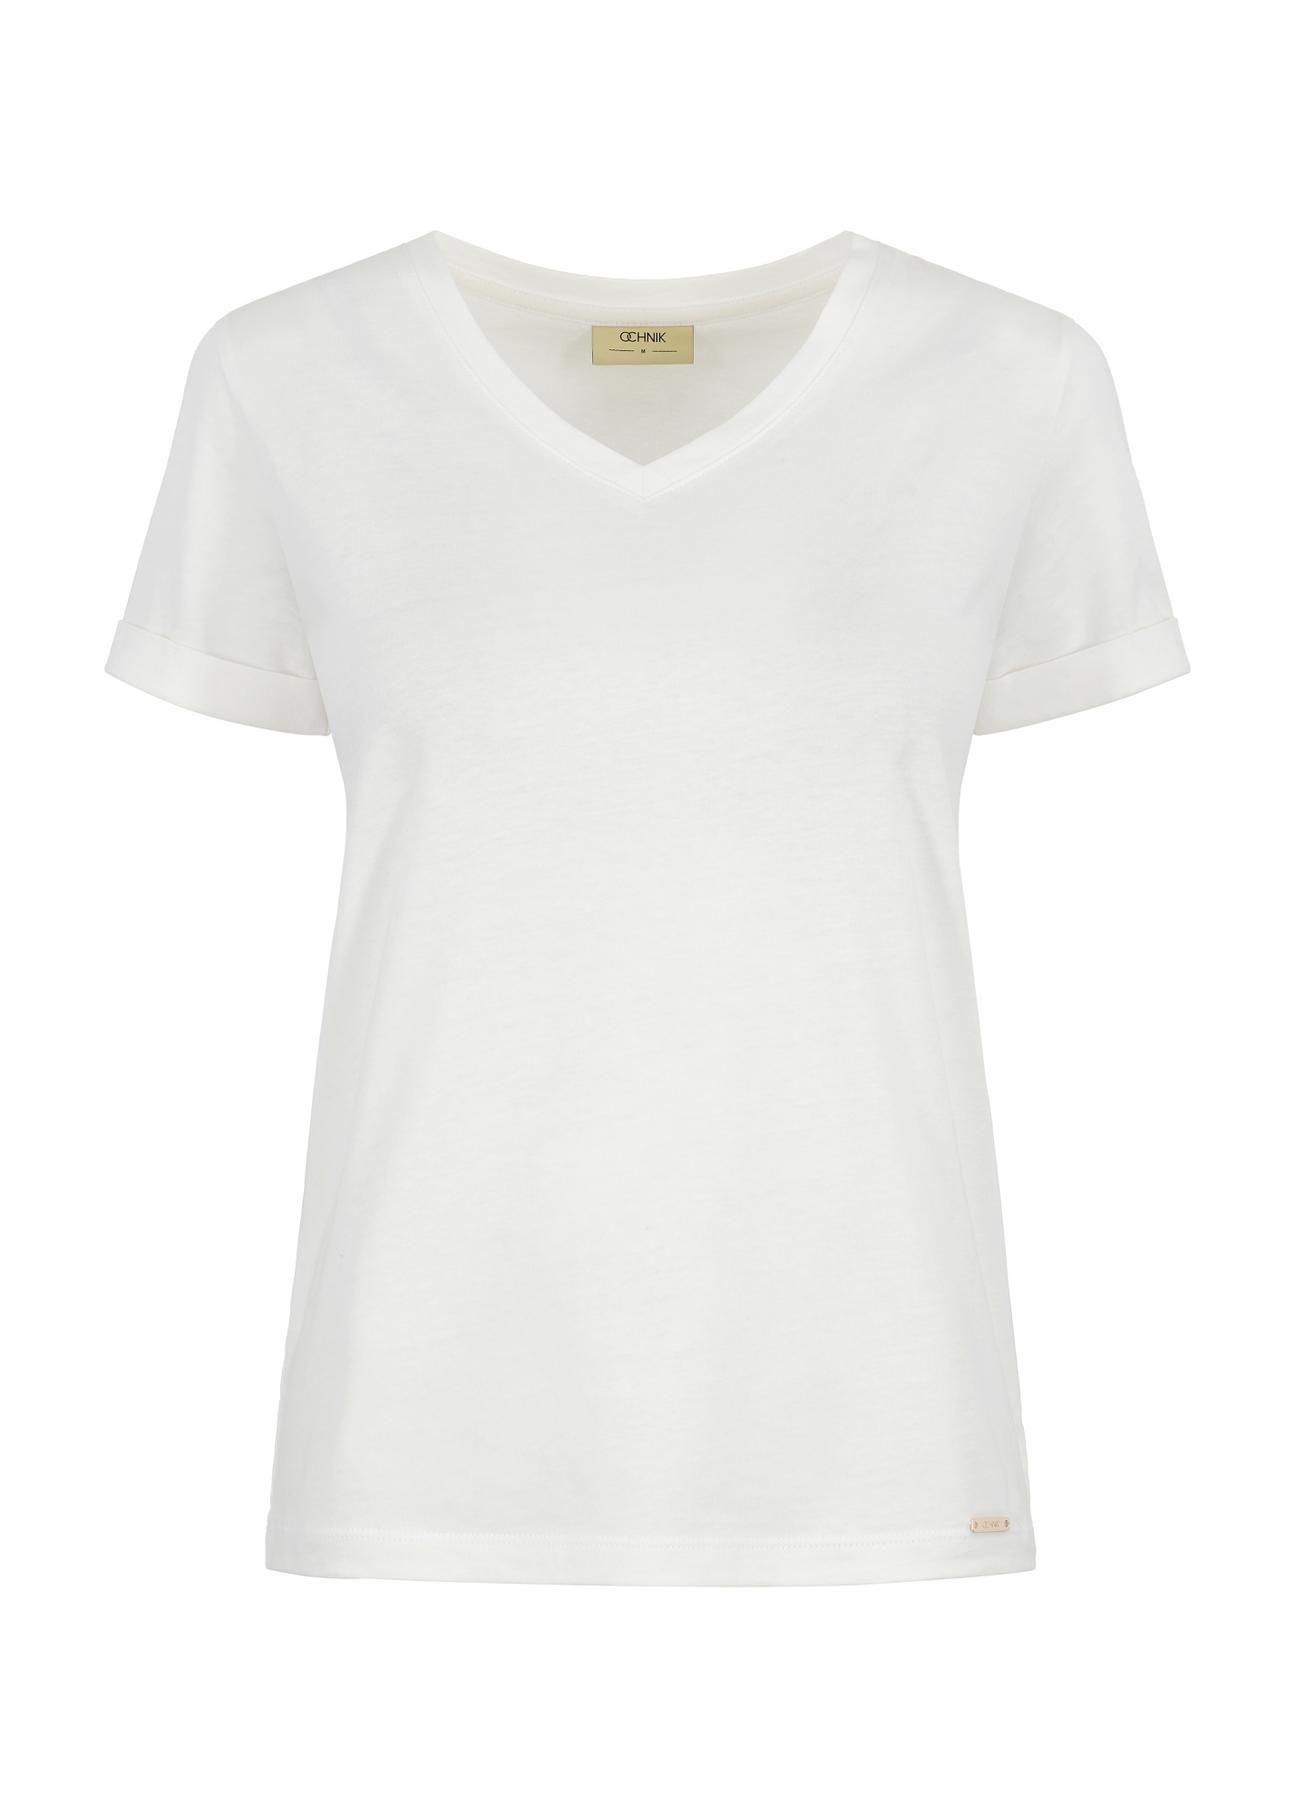 Kremowy T-shirt damski w serek TSHDT-0118-12(W24)